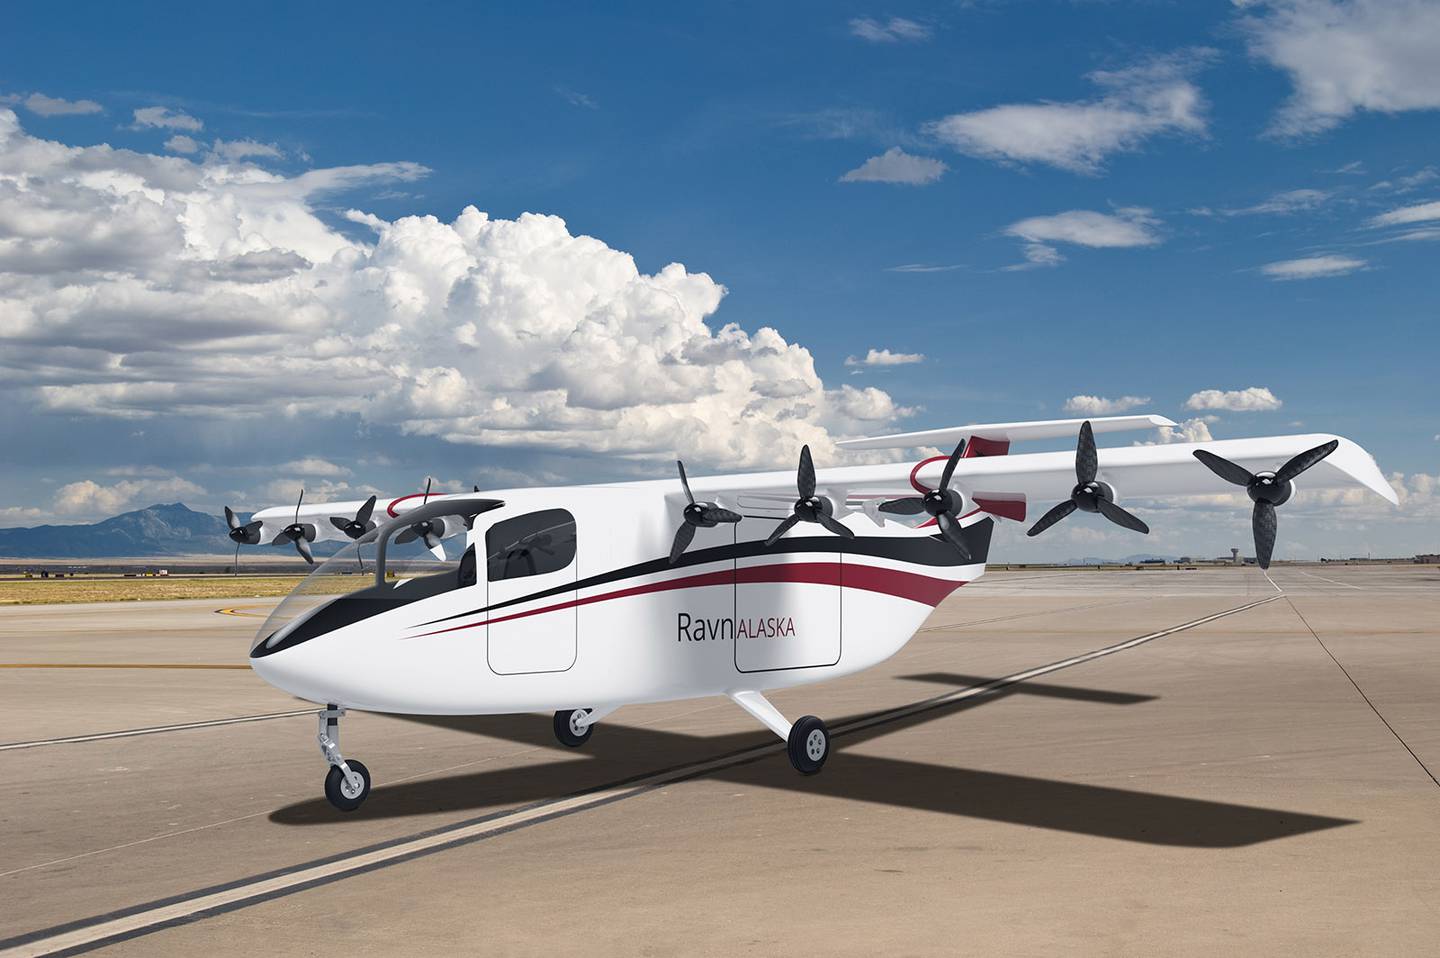 Airflow hybrid electric airplane for Ravn Alaska.